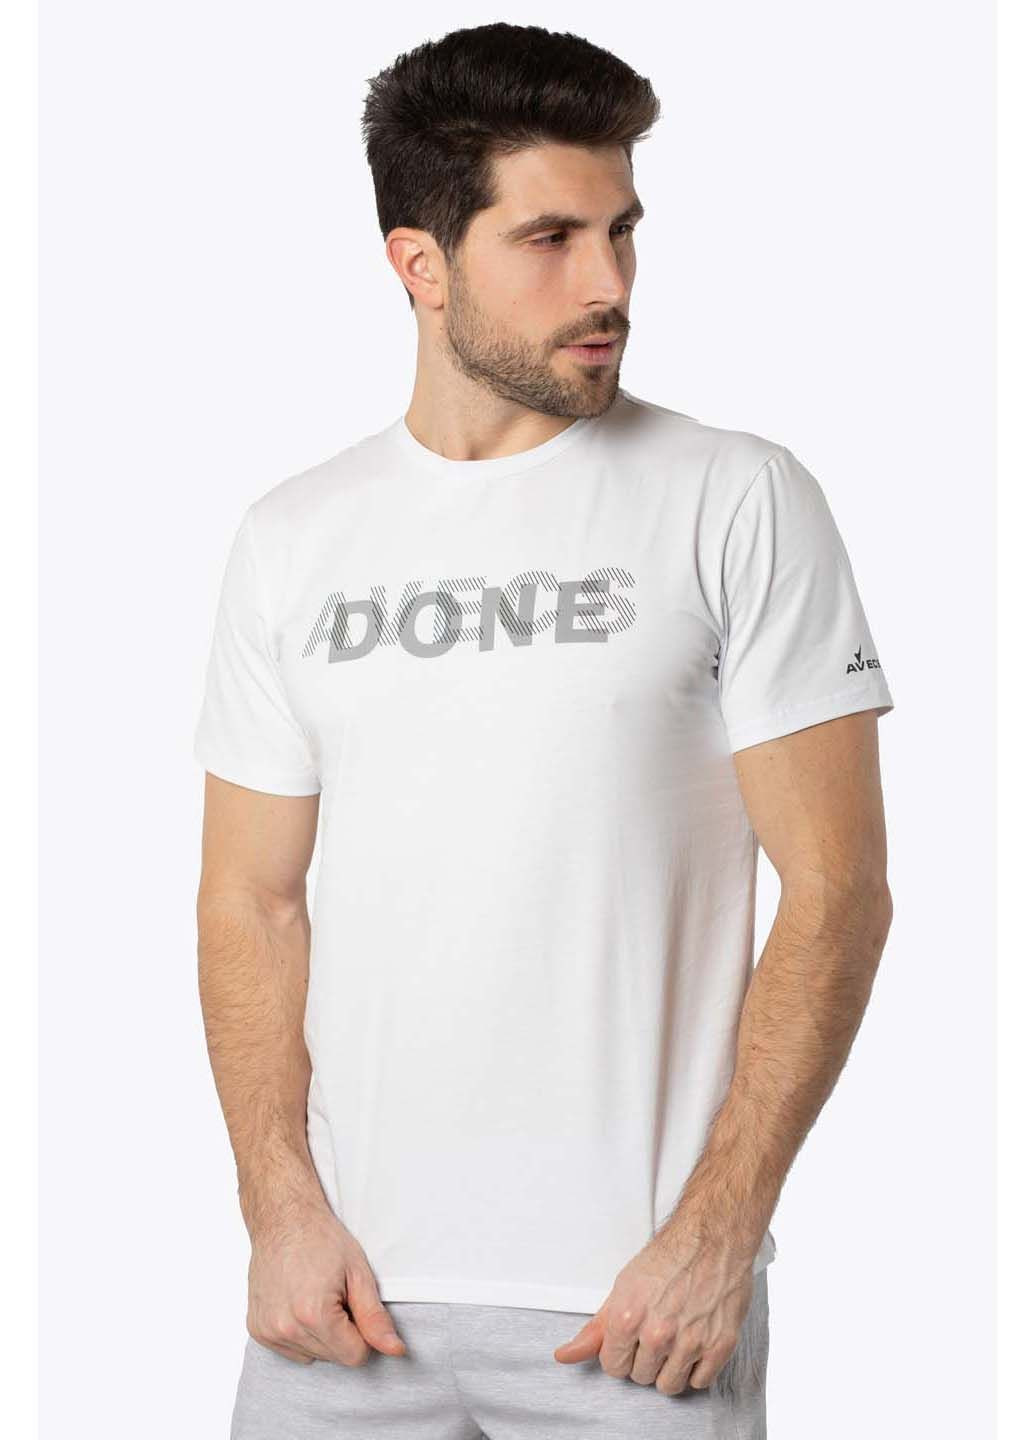 Белая футболка Avecs